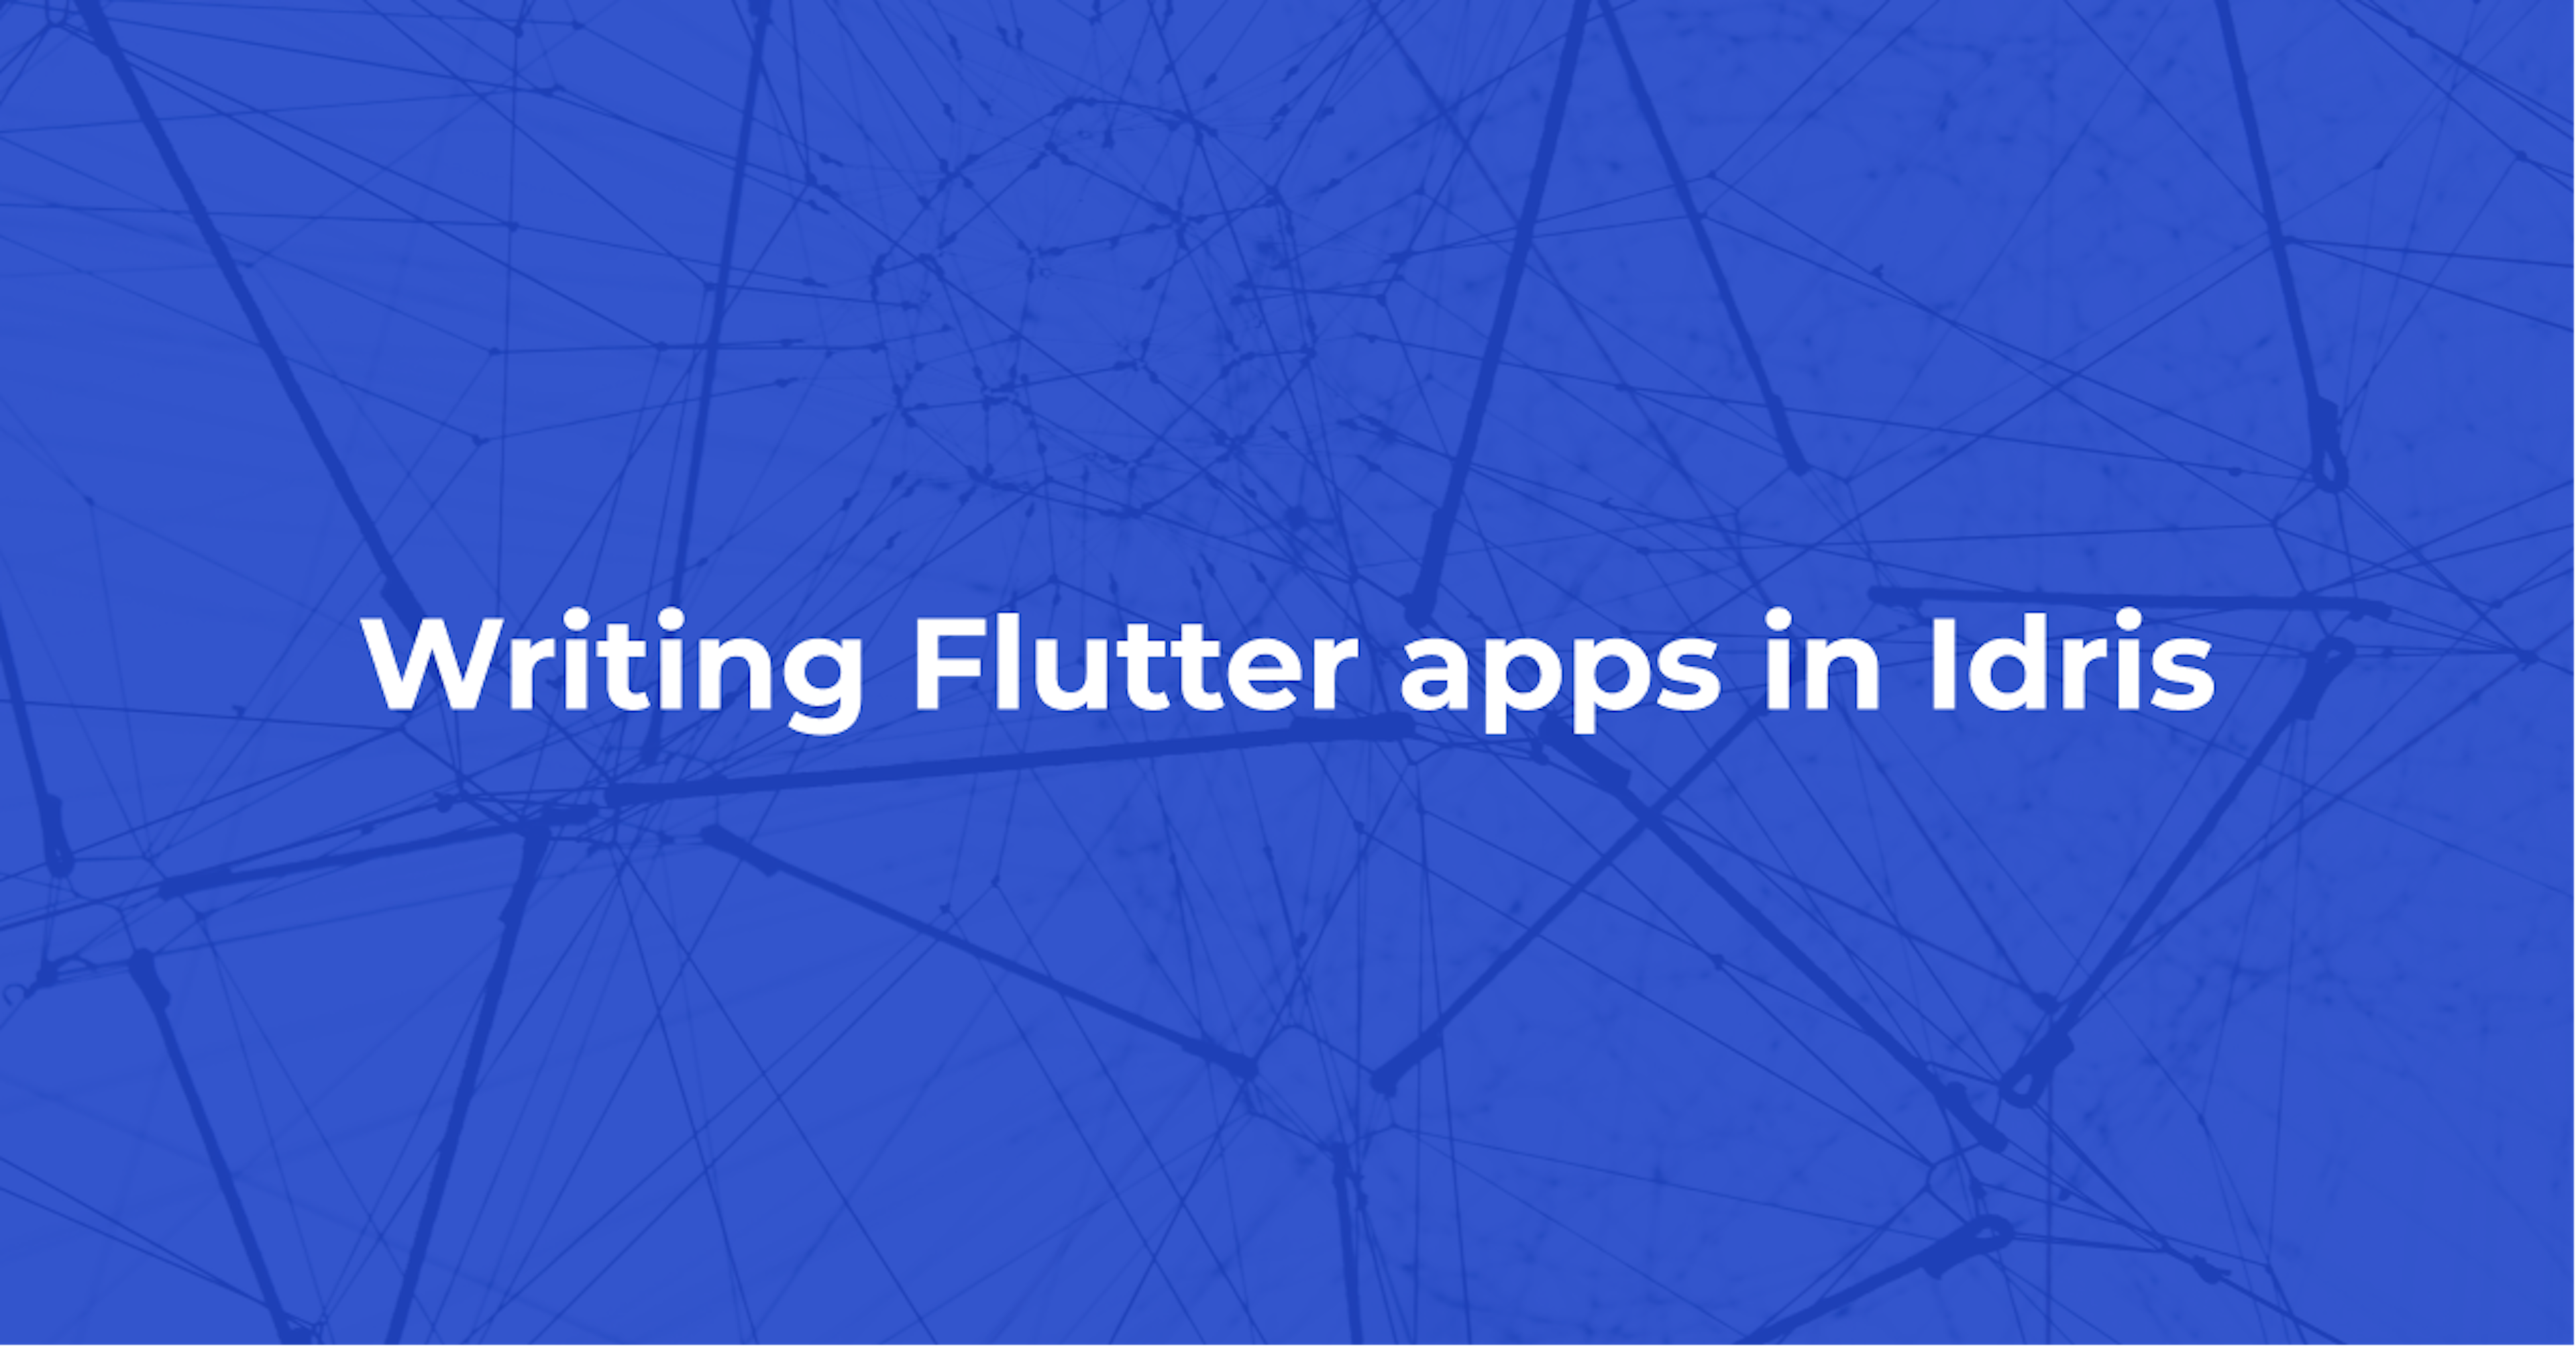 Writing Flutter apps in Idris